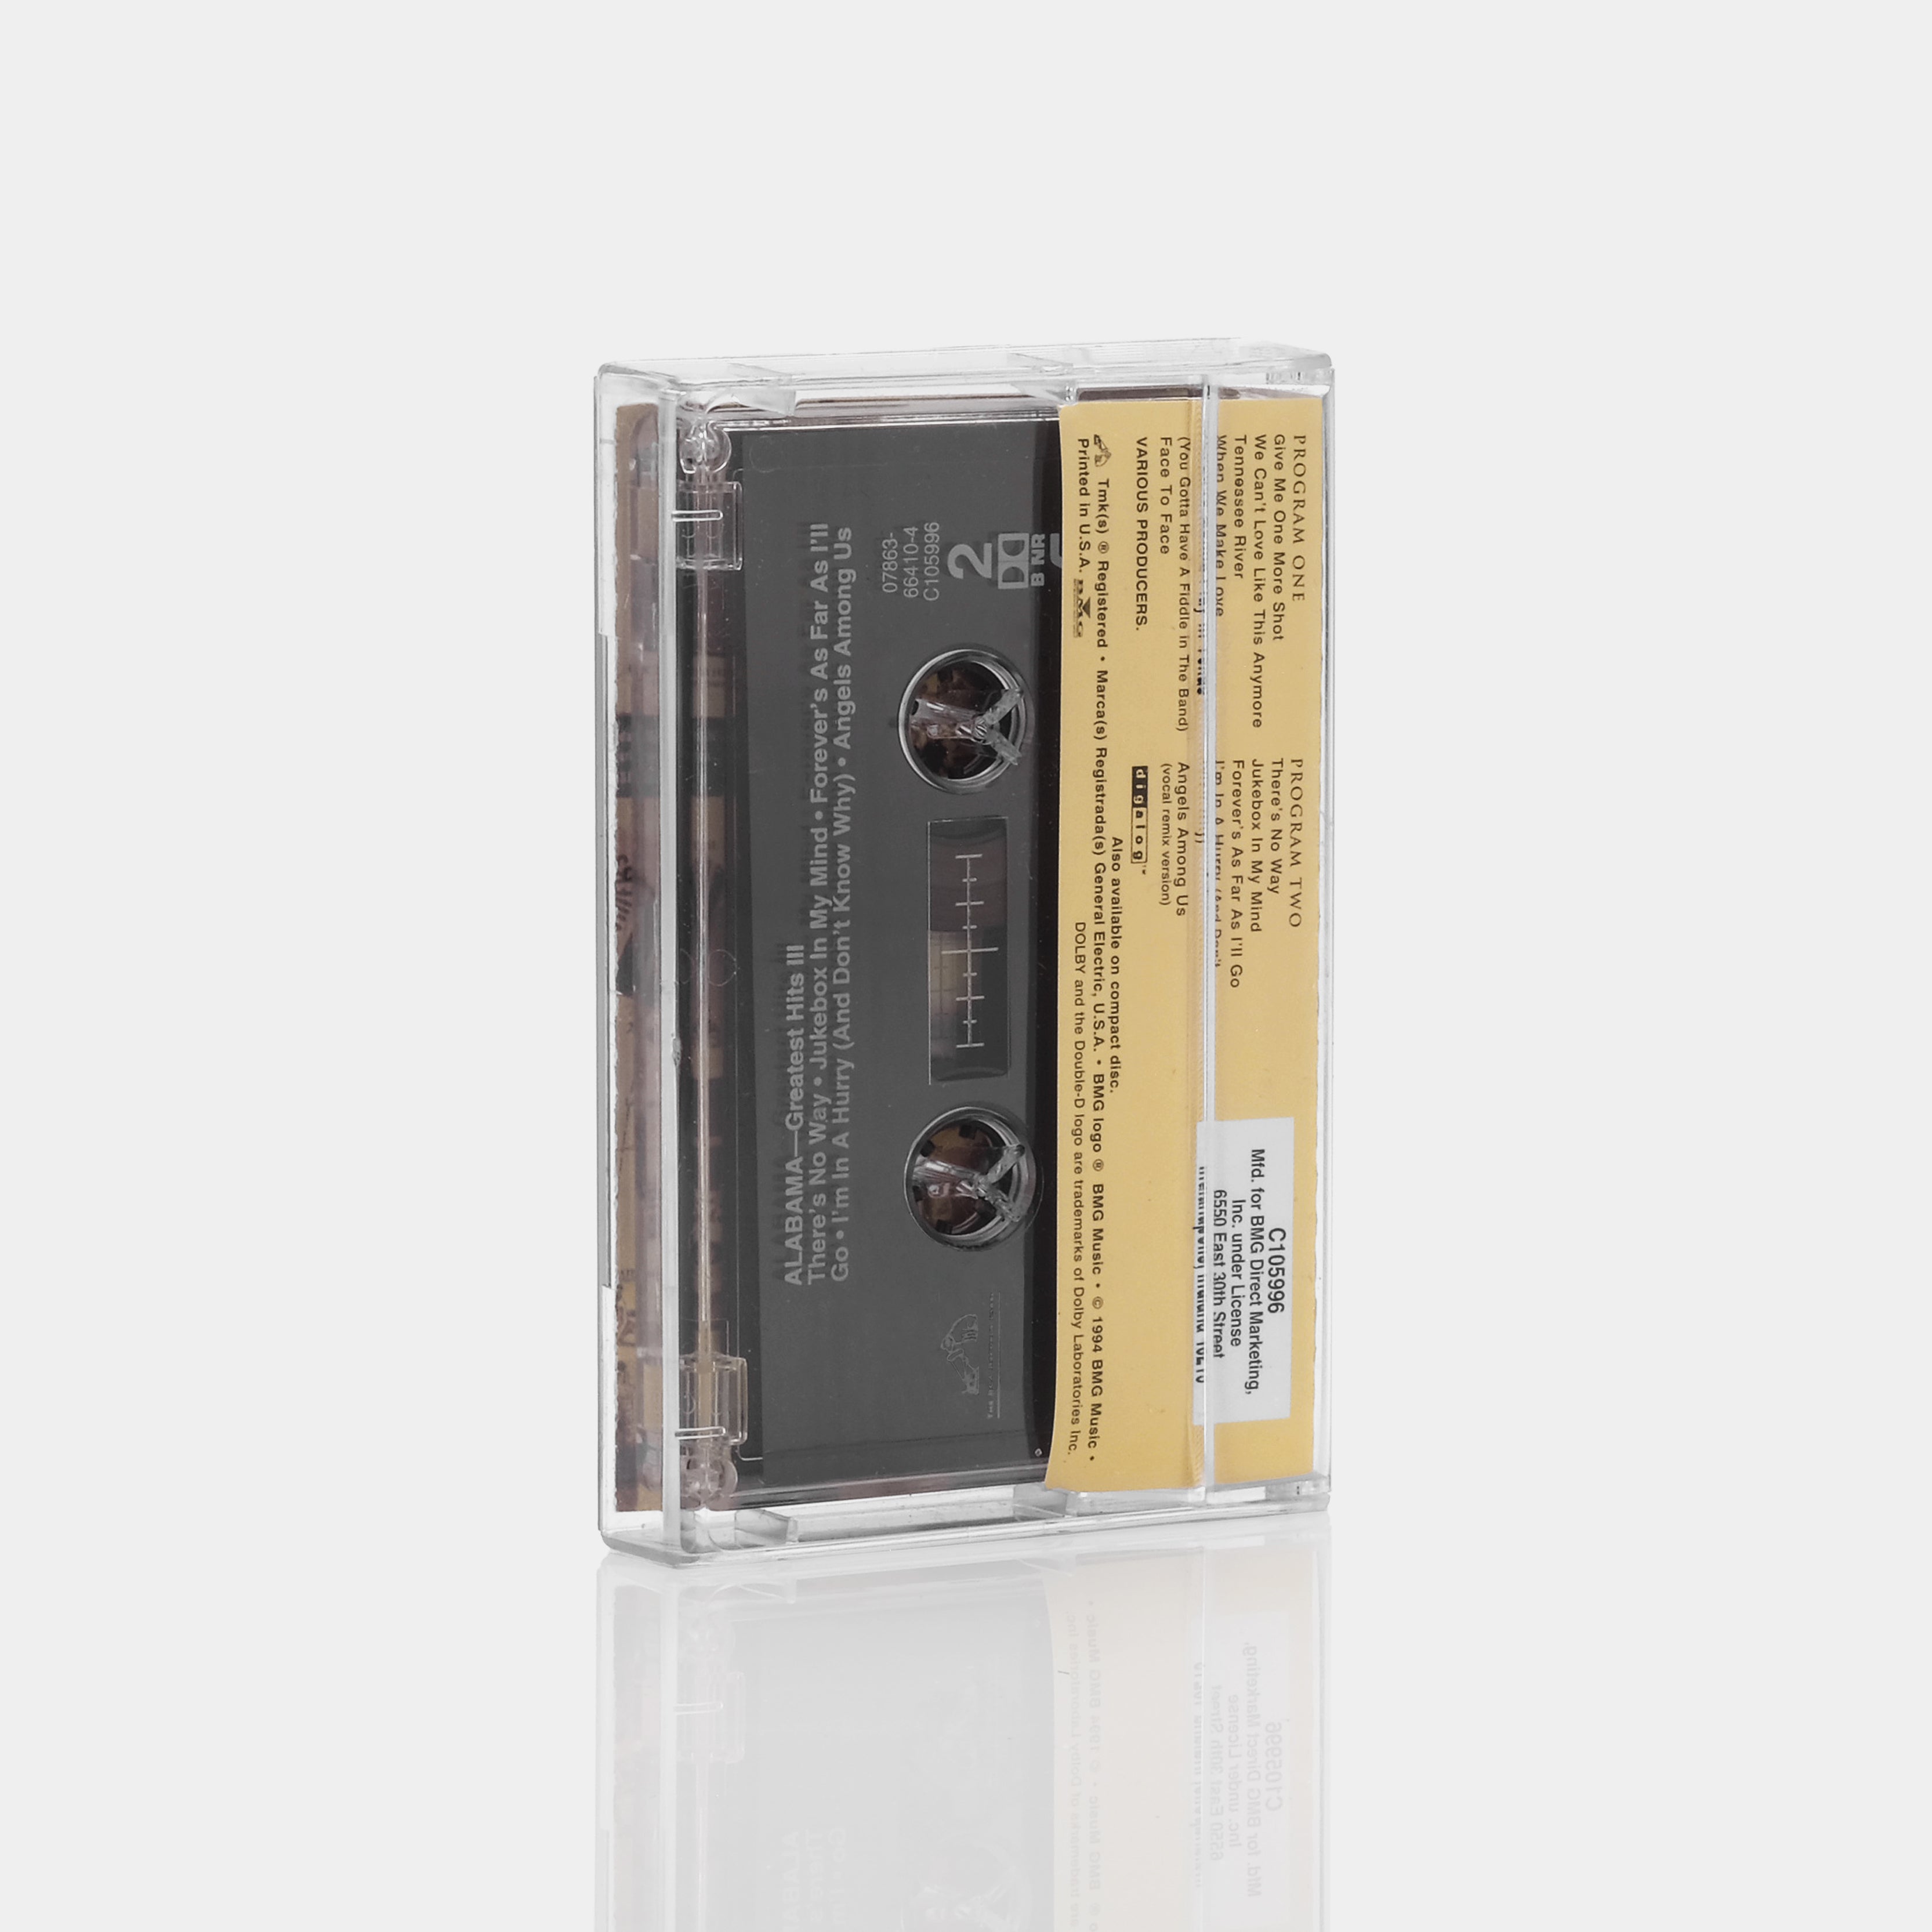 Alabama - Greatest Hits III Cassette Tape